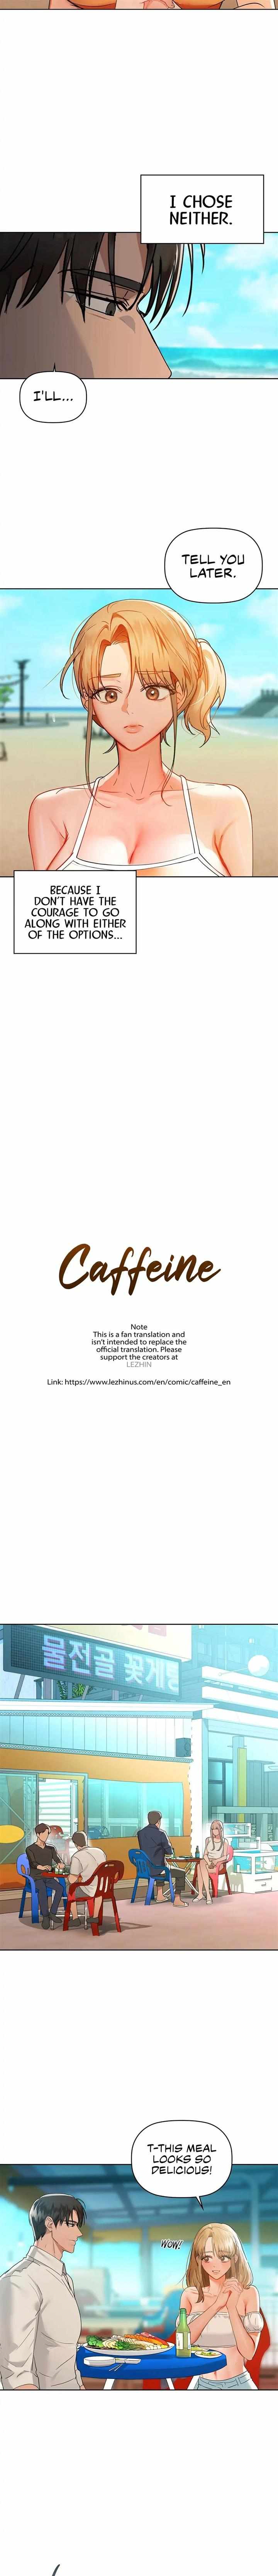 Caffeine - Page 3